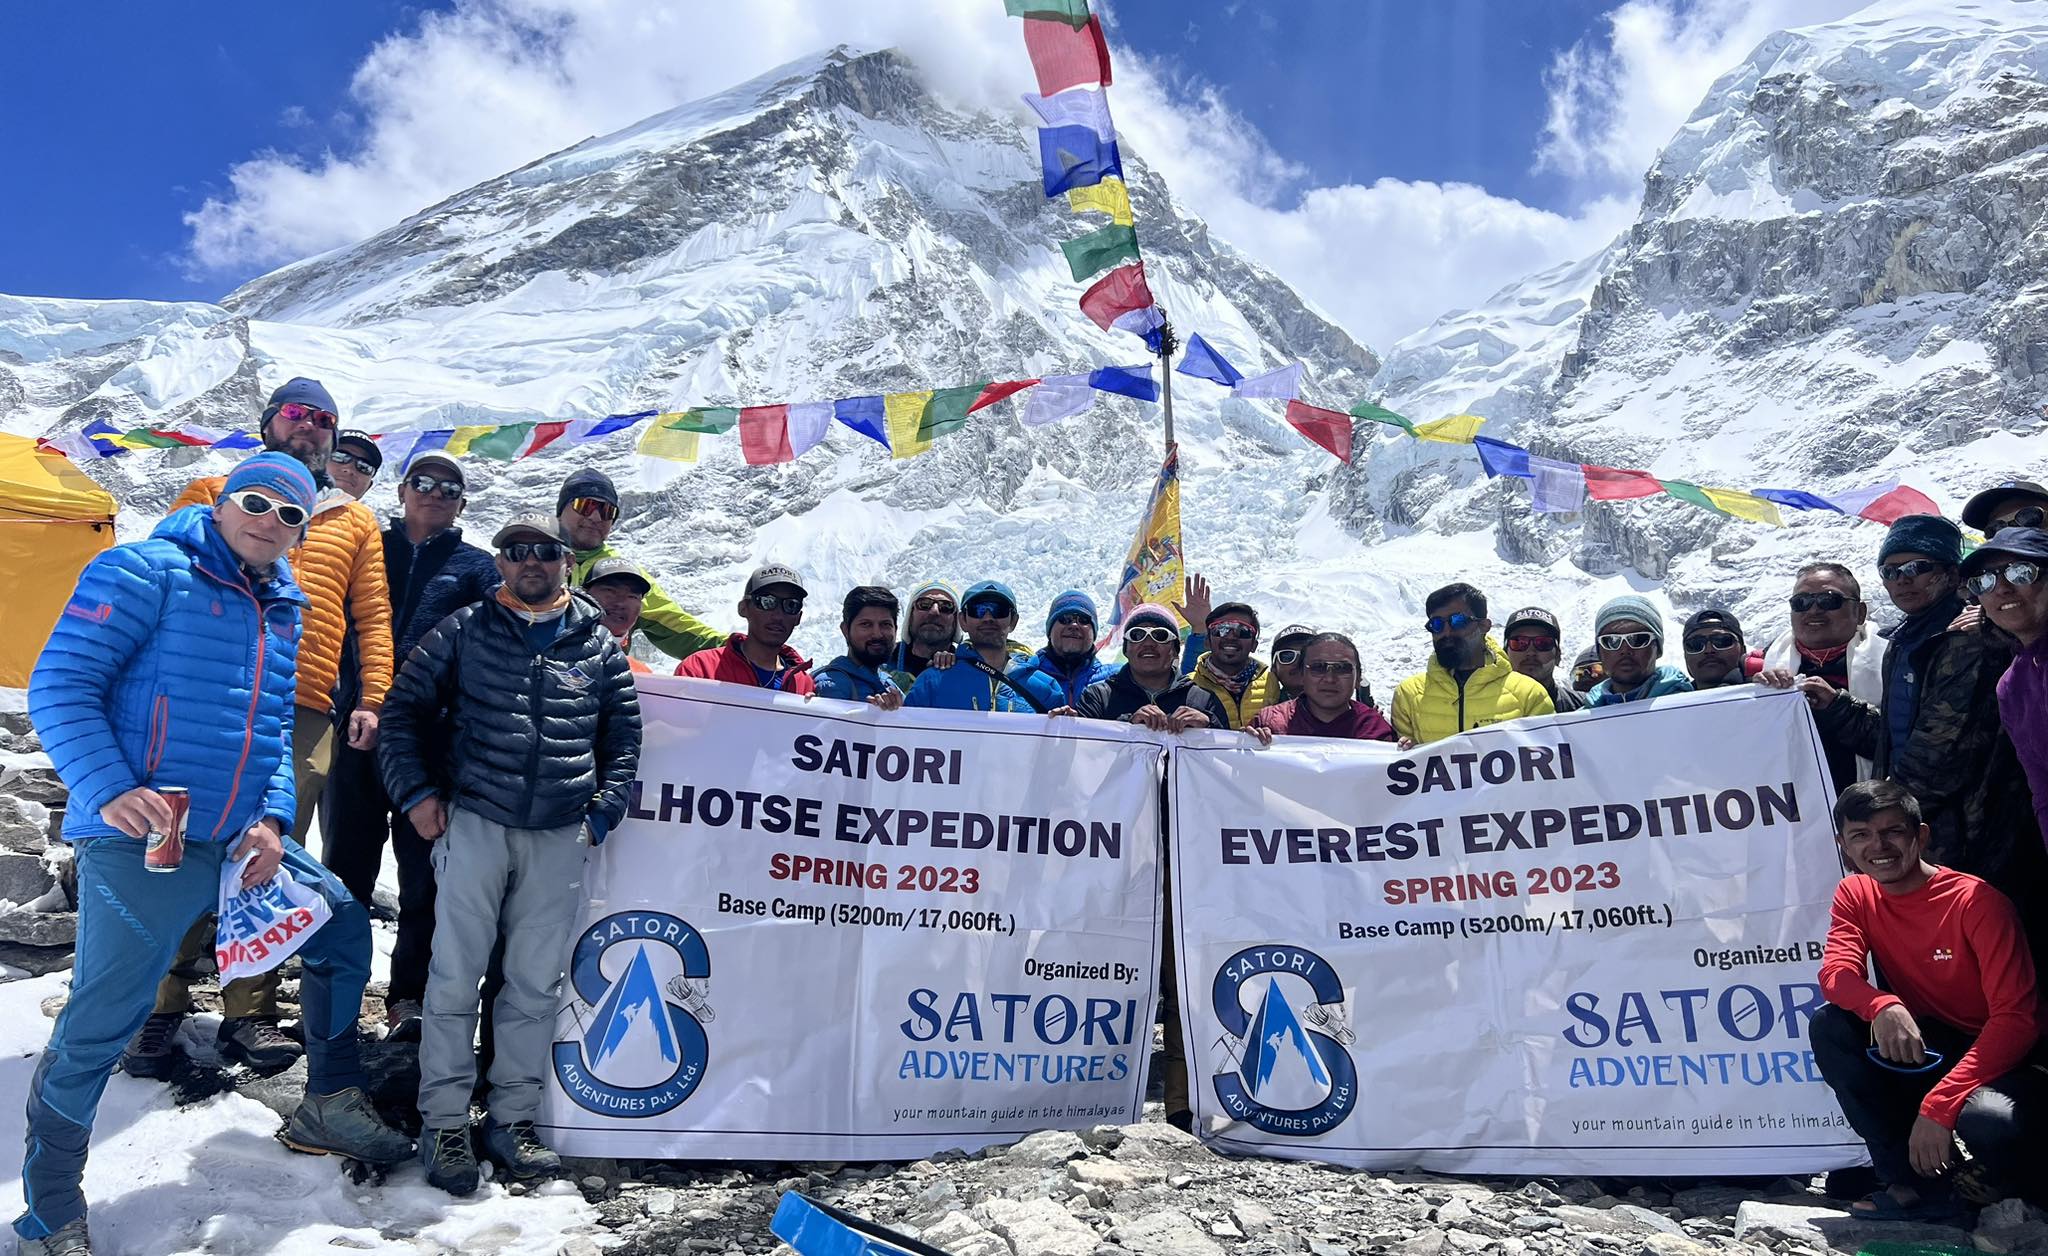 Satori Everest Expedition Spring 2023